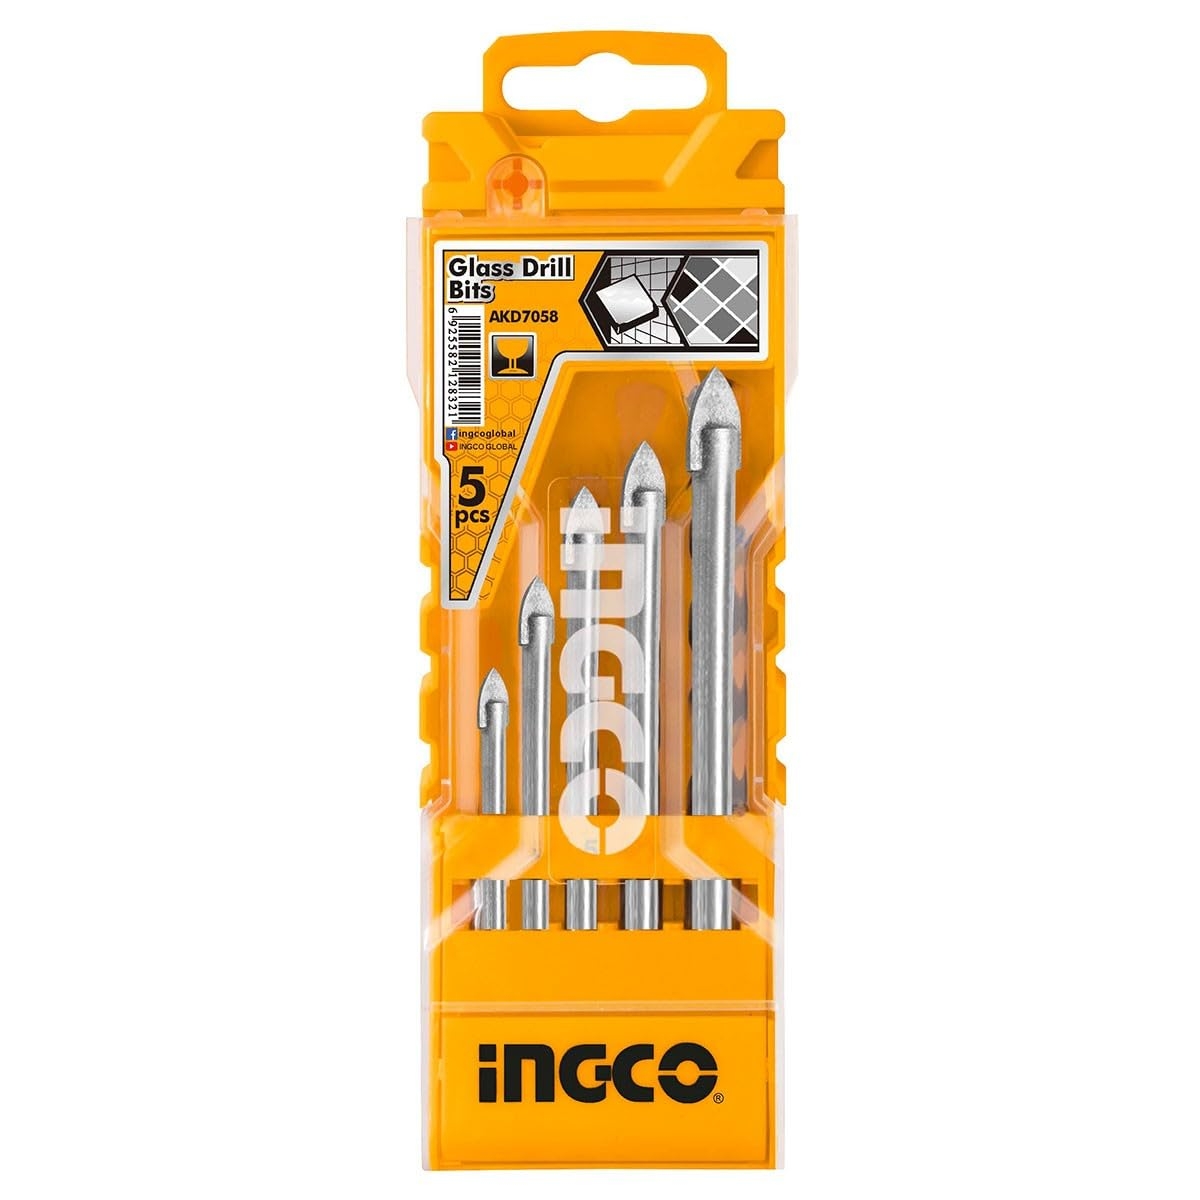 INGCO 5 Pcs Glass Drill Bits Set | Multipurpose use Bits for Glassware, Mirrors, Tiles (AKD7058)